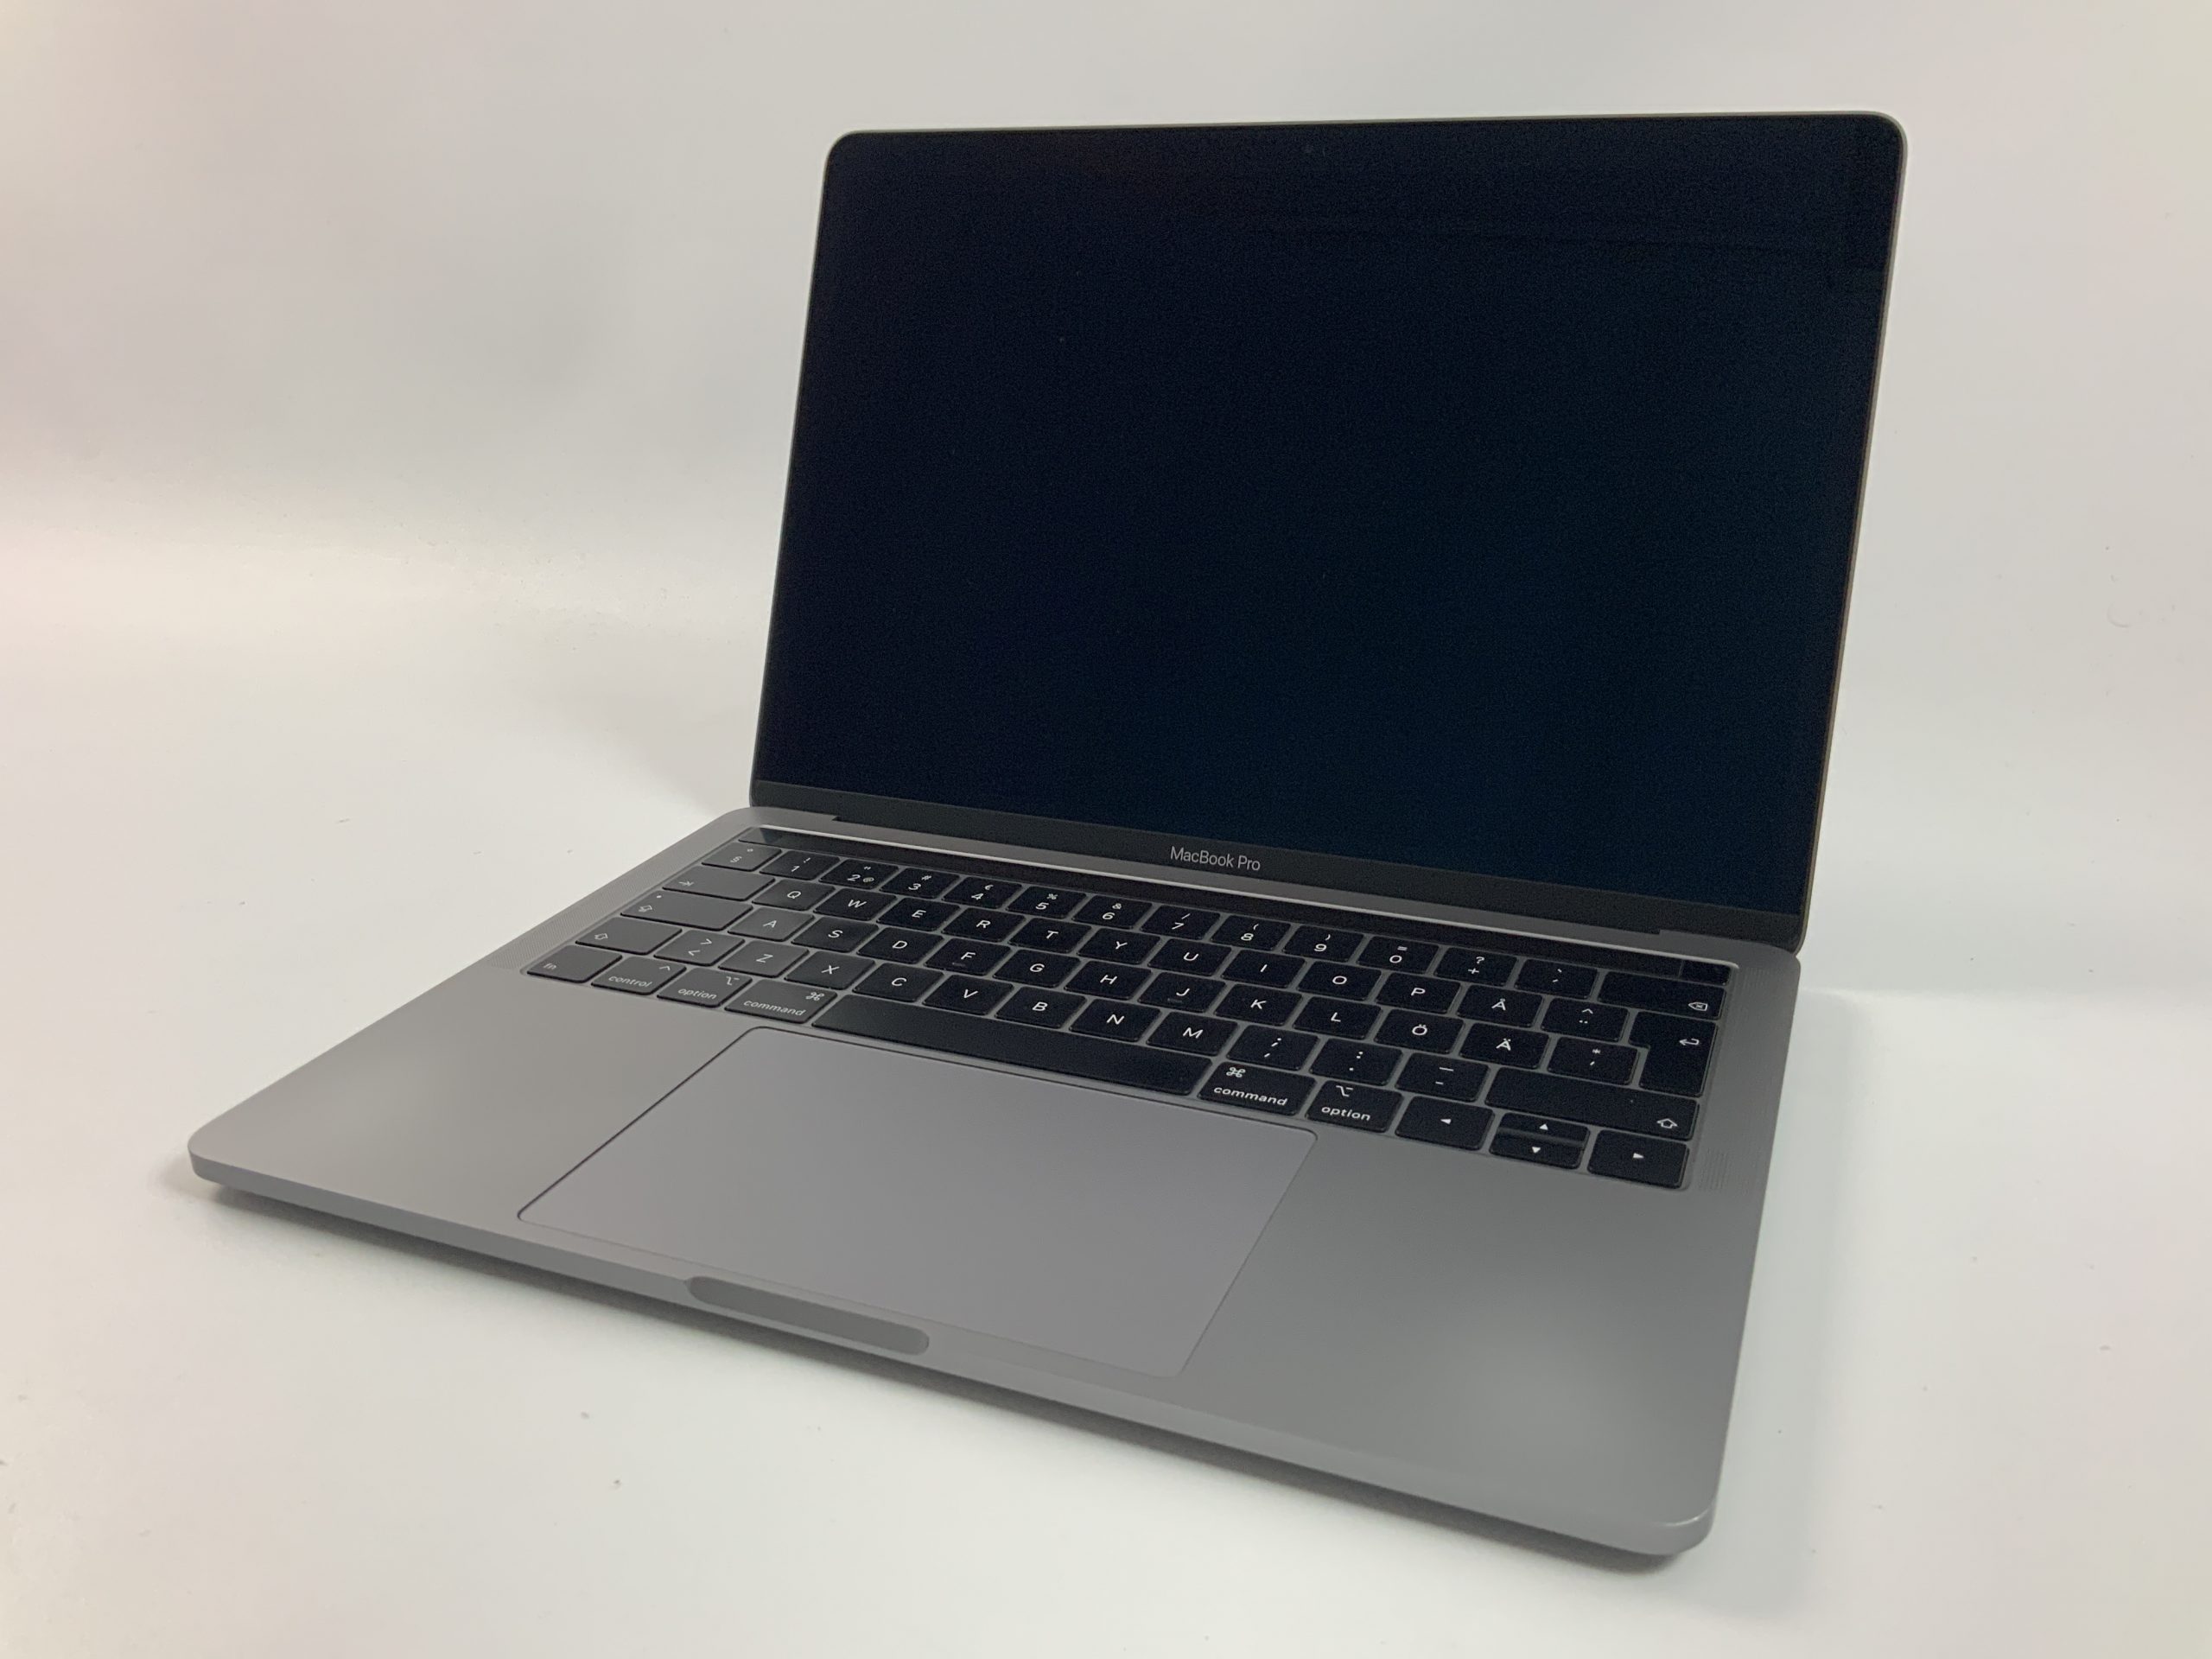 MacBook Pro 13" 4TBT Mid 2019 (Intel Quad-Core i7 2.8 GHz 8 GB RAM 256 GB SSD), Space Gray, Intel Quad-Core i7 2.8 GHz, 8 GB RAM, 256 GB SSD, imagen 1